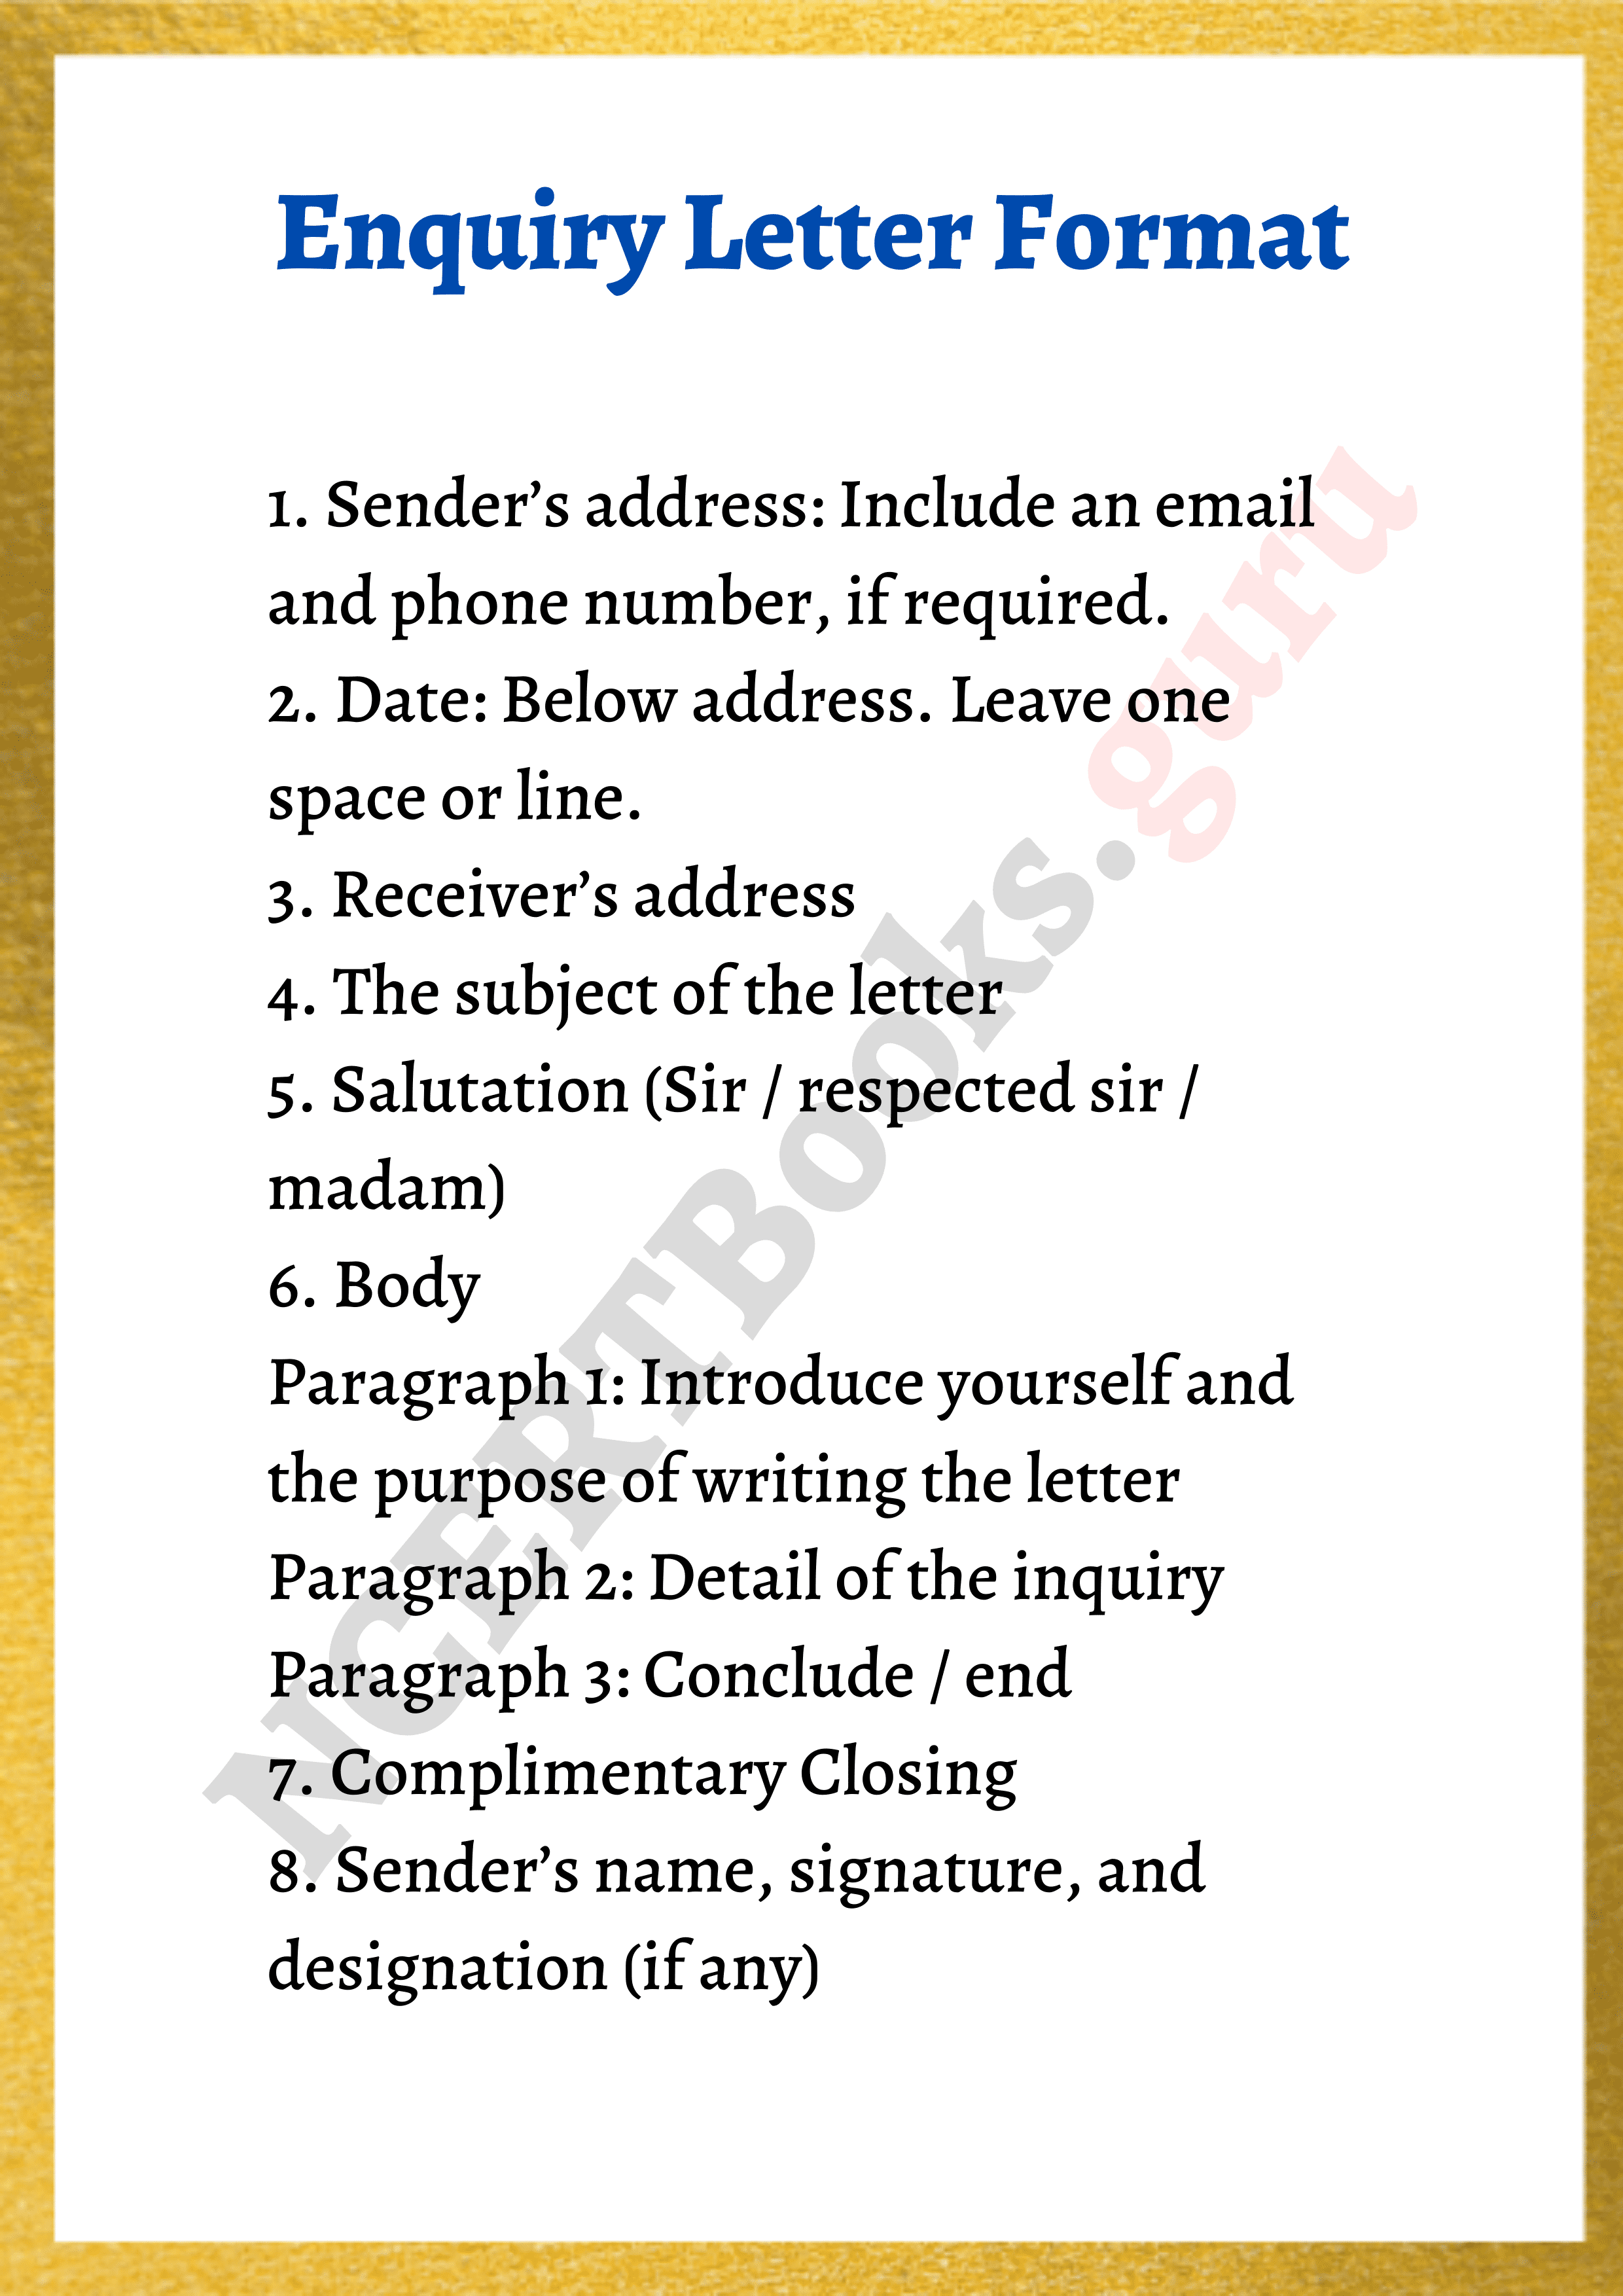 Enquiry Letter Format